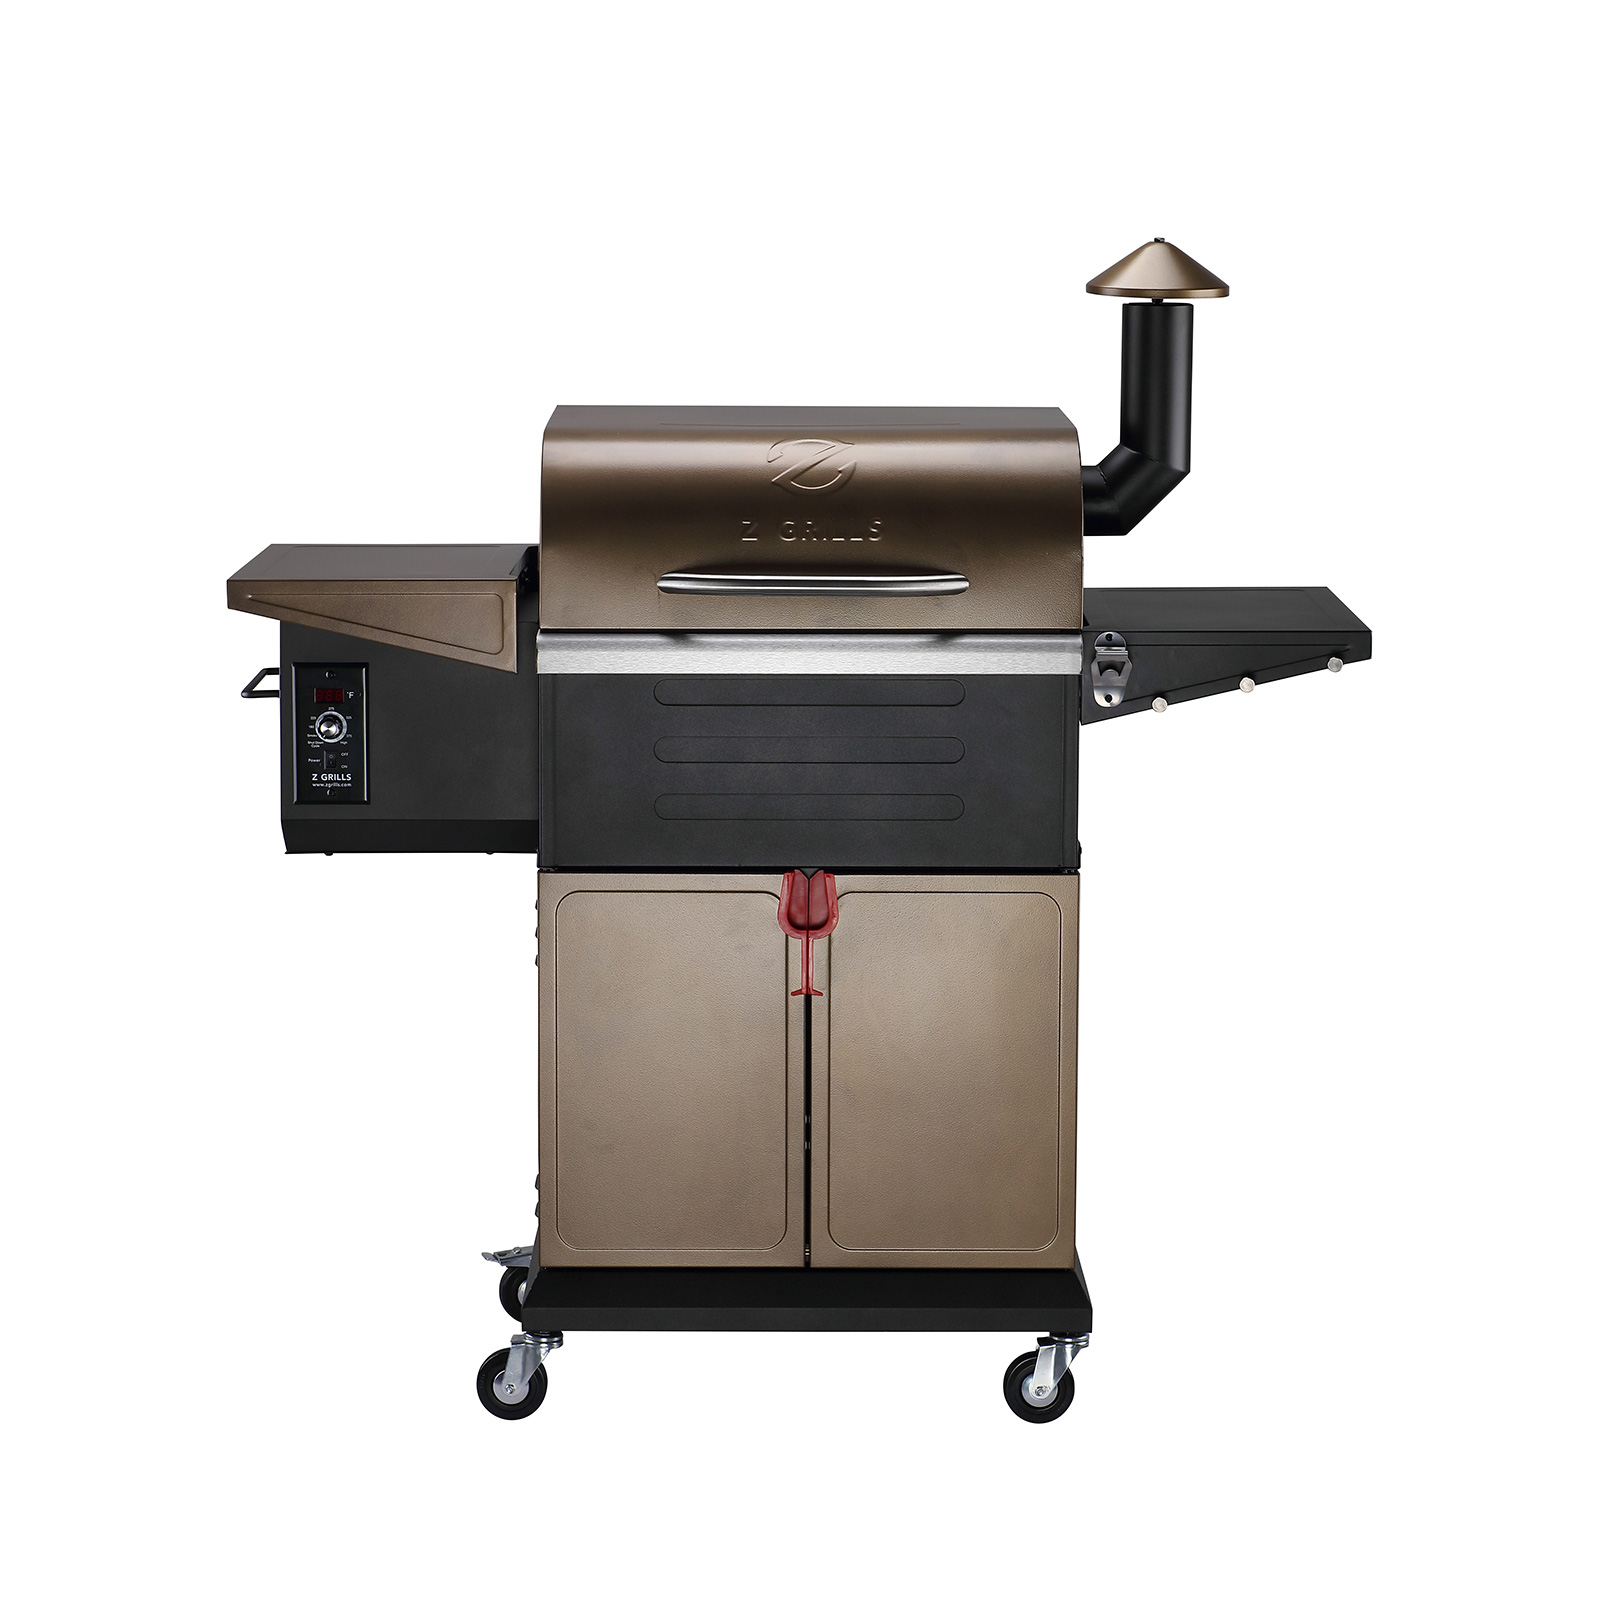 https://op2.0ps.us/original/opplanet-z-grills-zpg-600d-wood-pellet-grill-smoker-brown-black-medium-zpg-600d-main